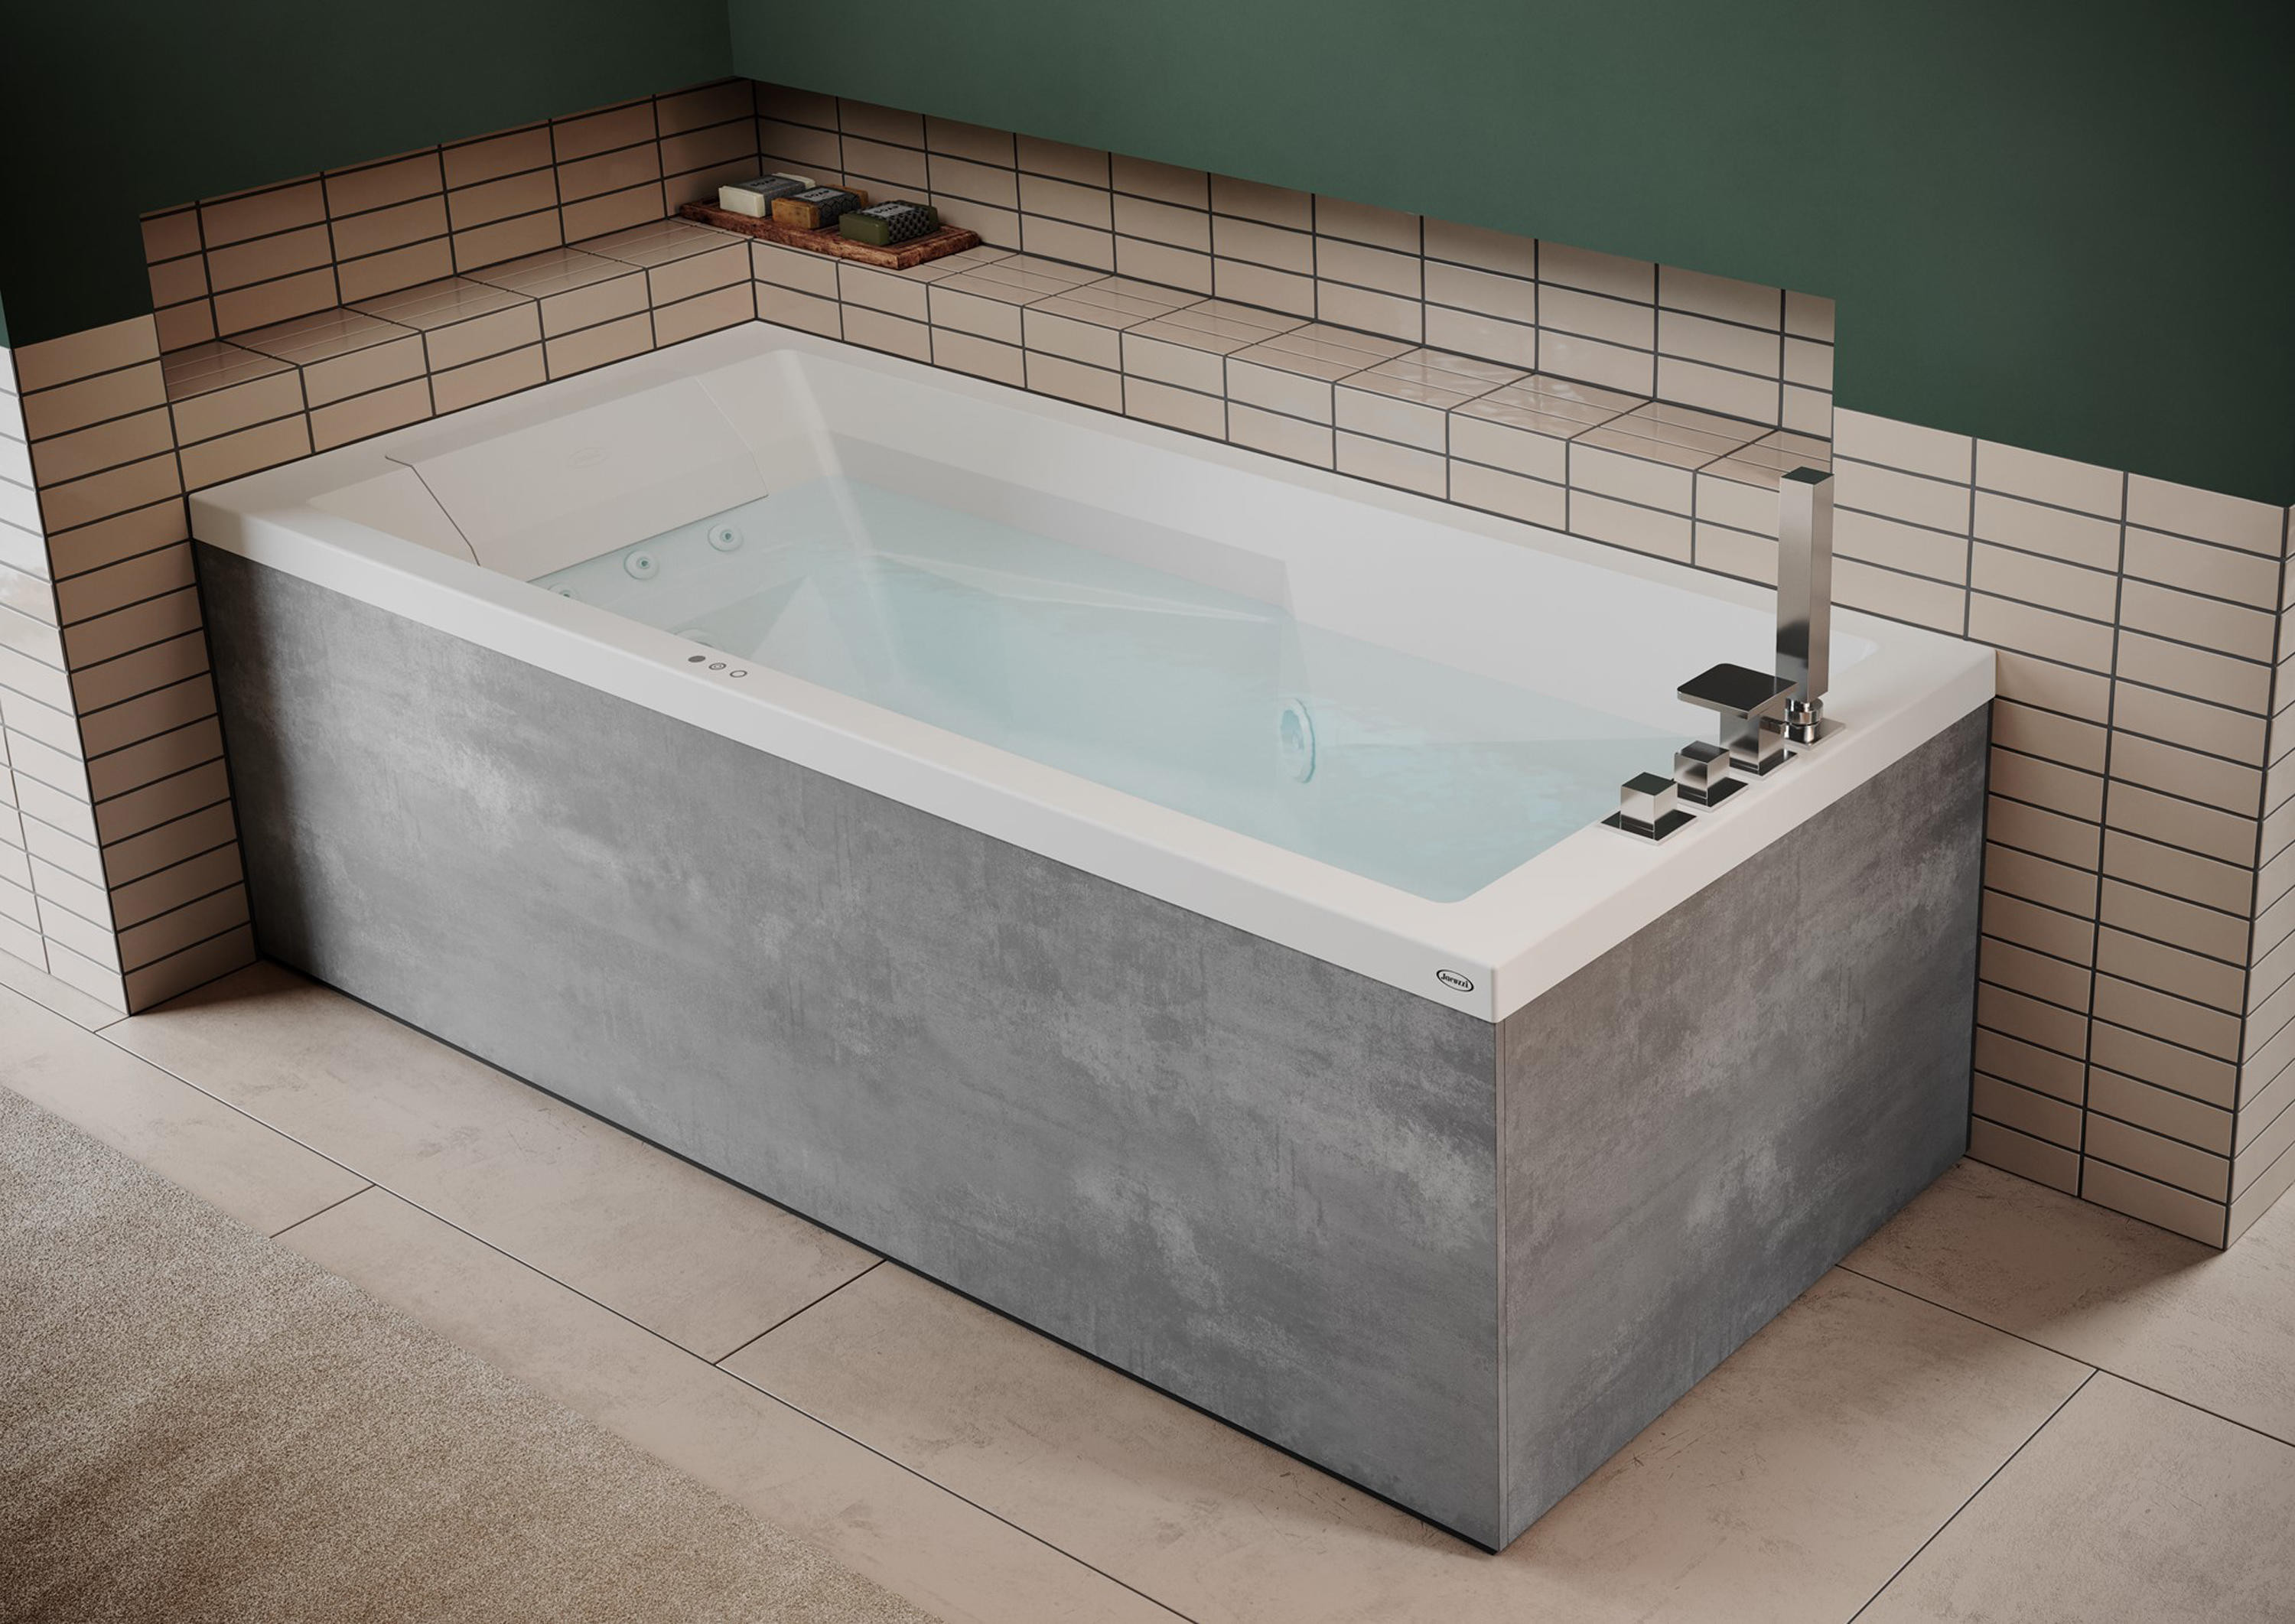 SHARP EXTRA Hydromassage freestanding rectangular bathtub By Jacuzzi®